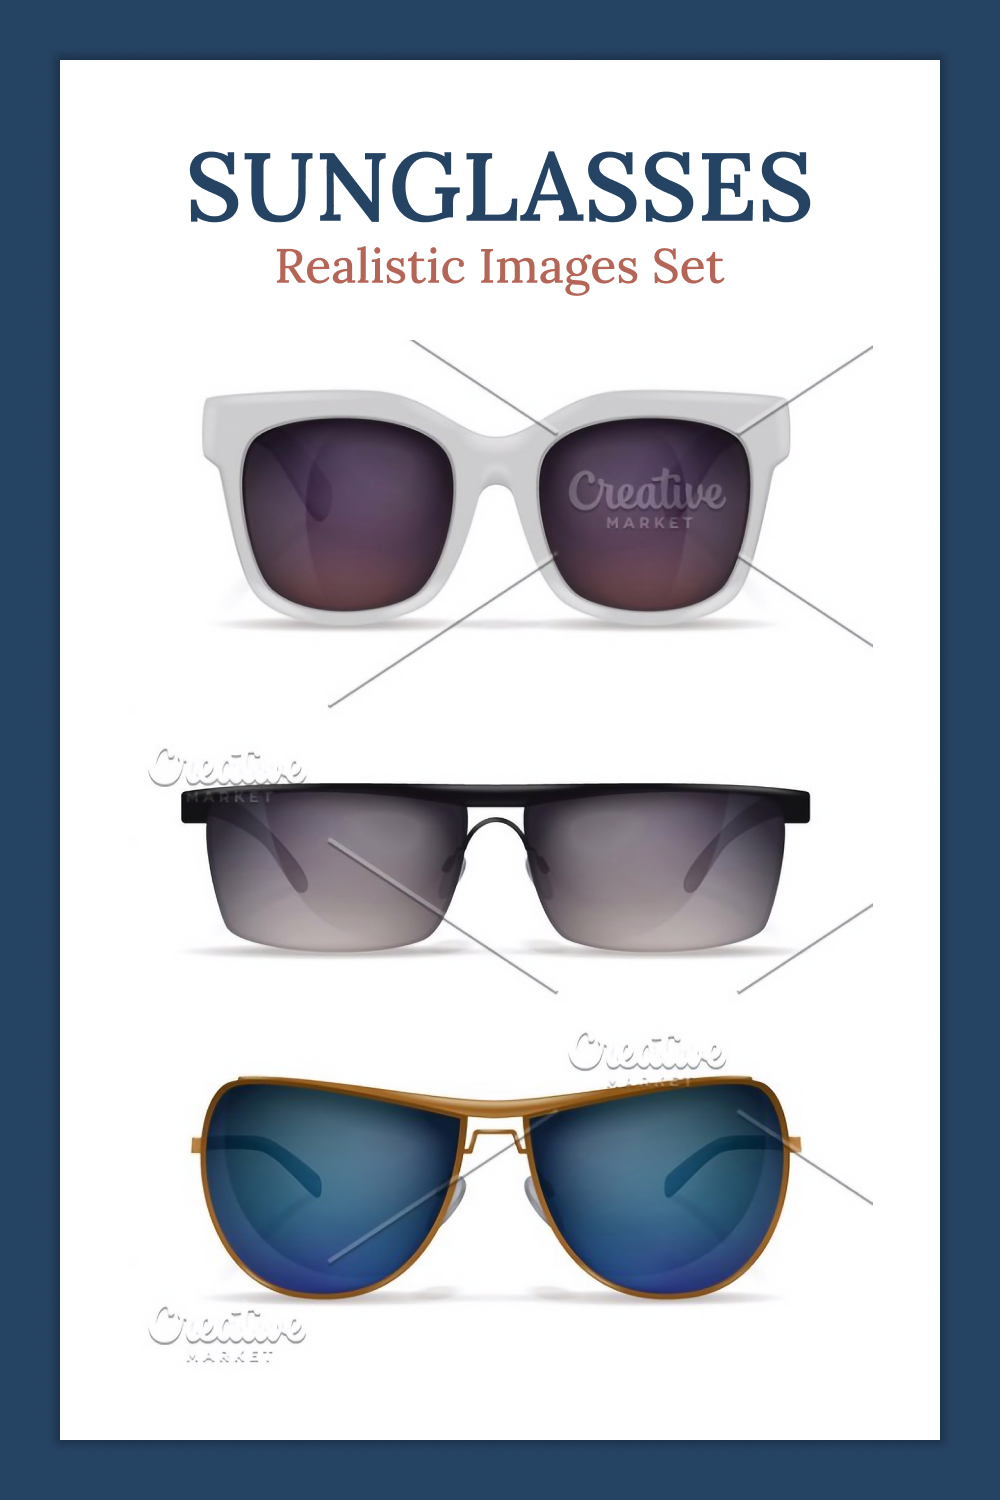 Sunglasses Realistic Images Set Pinterest Cover.